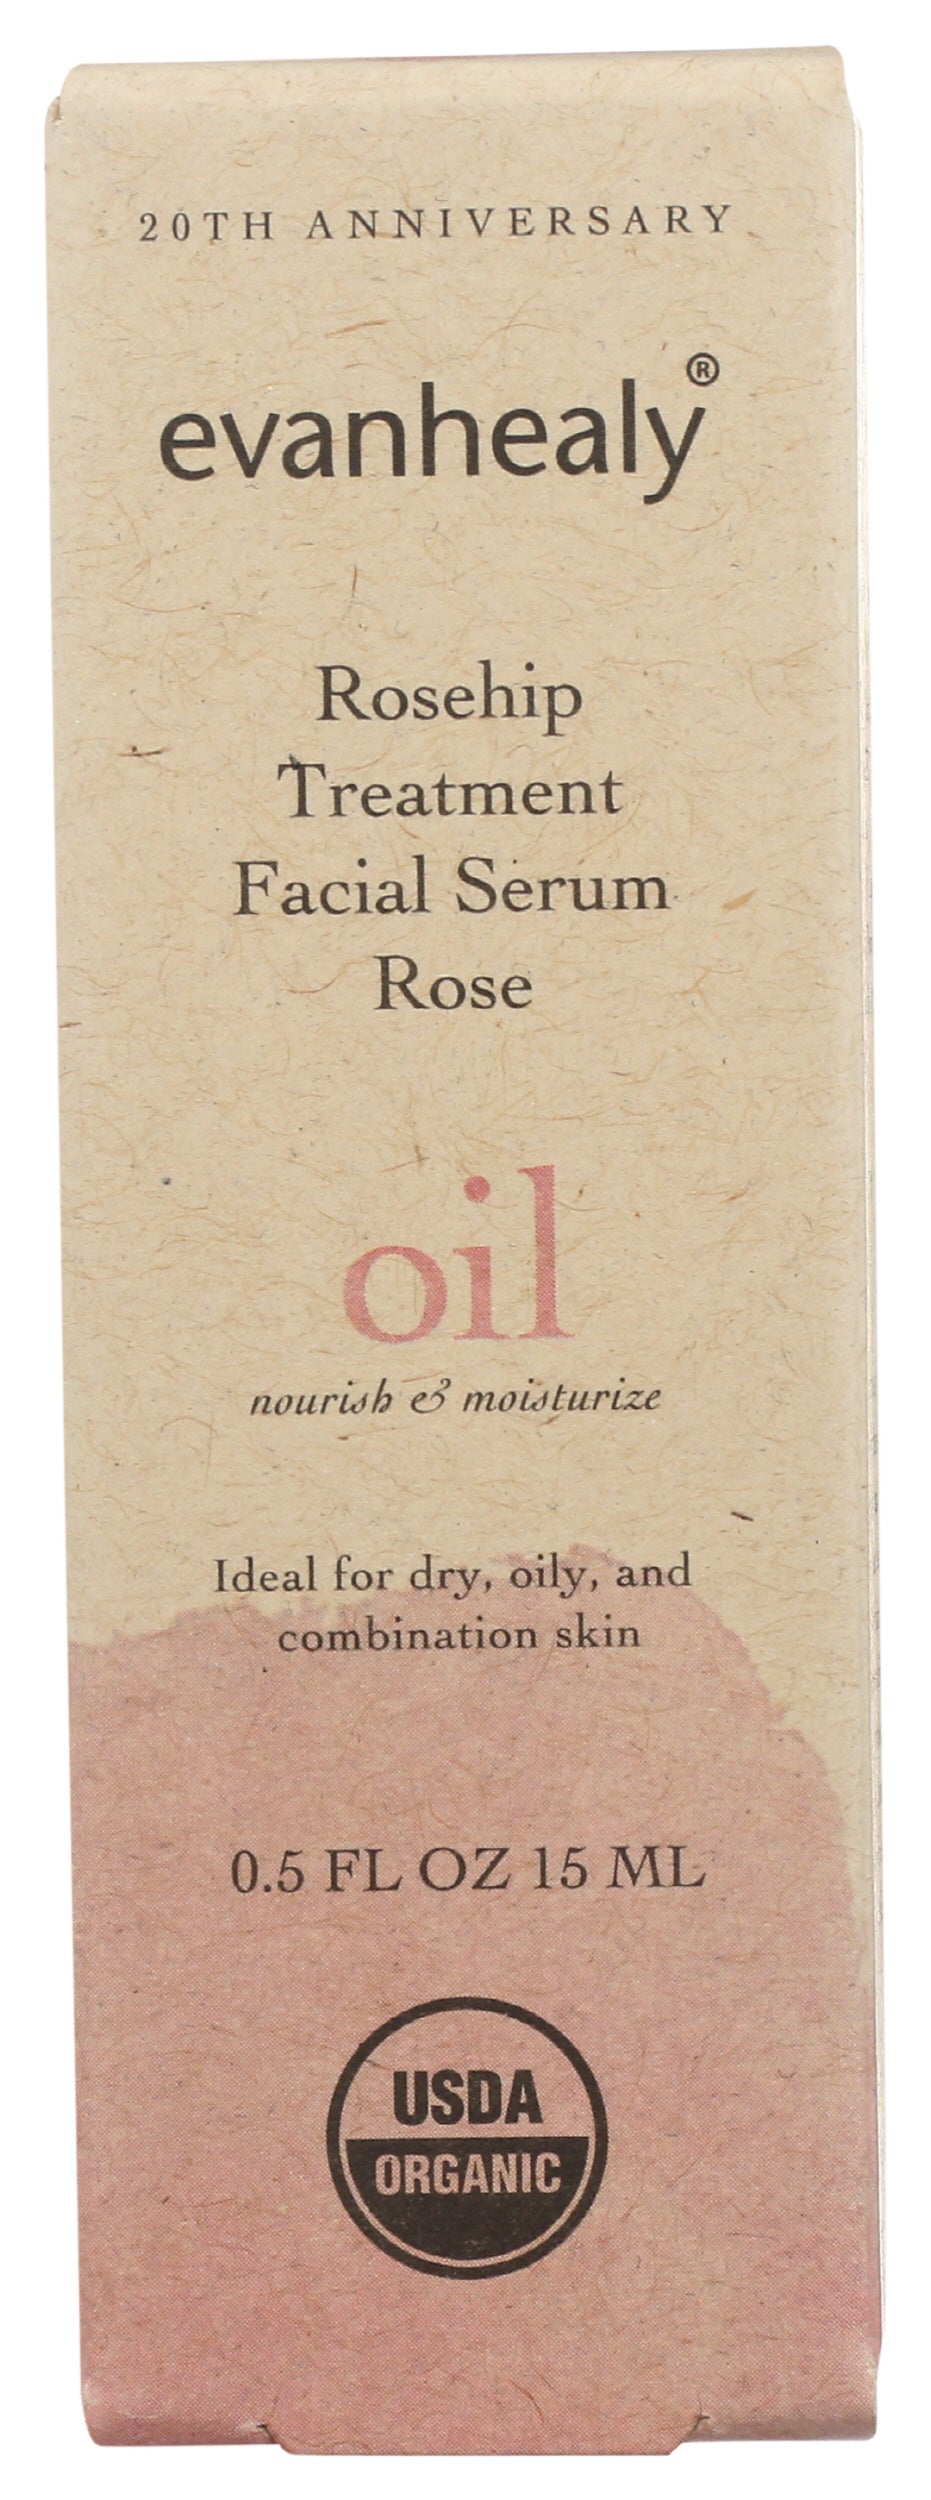 evanhealy Rosehip Treatment Facial Serum Rose Oil 0.5 Fl. Oz. Front